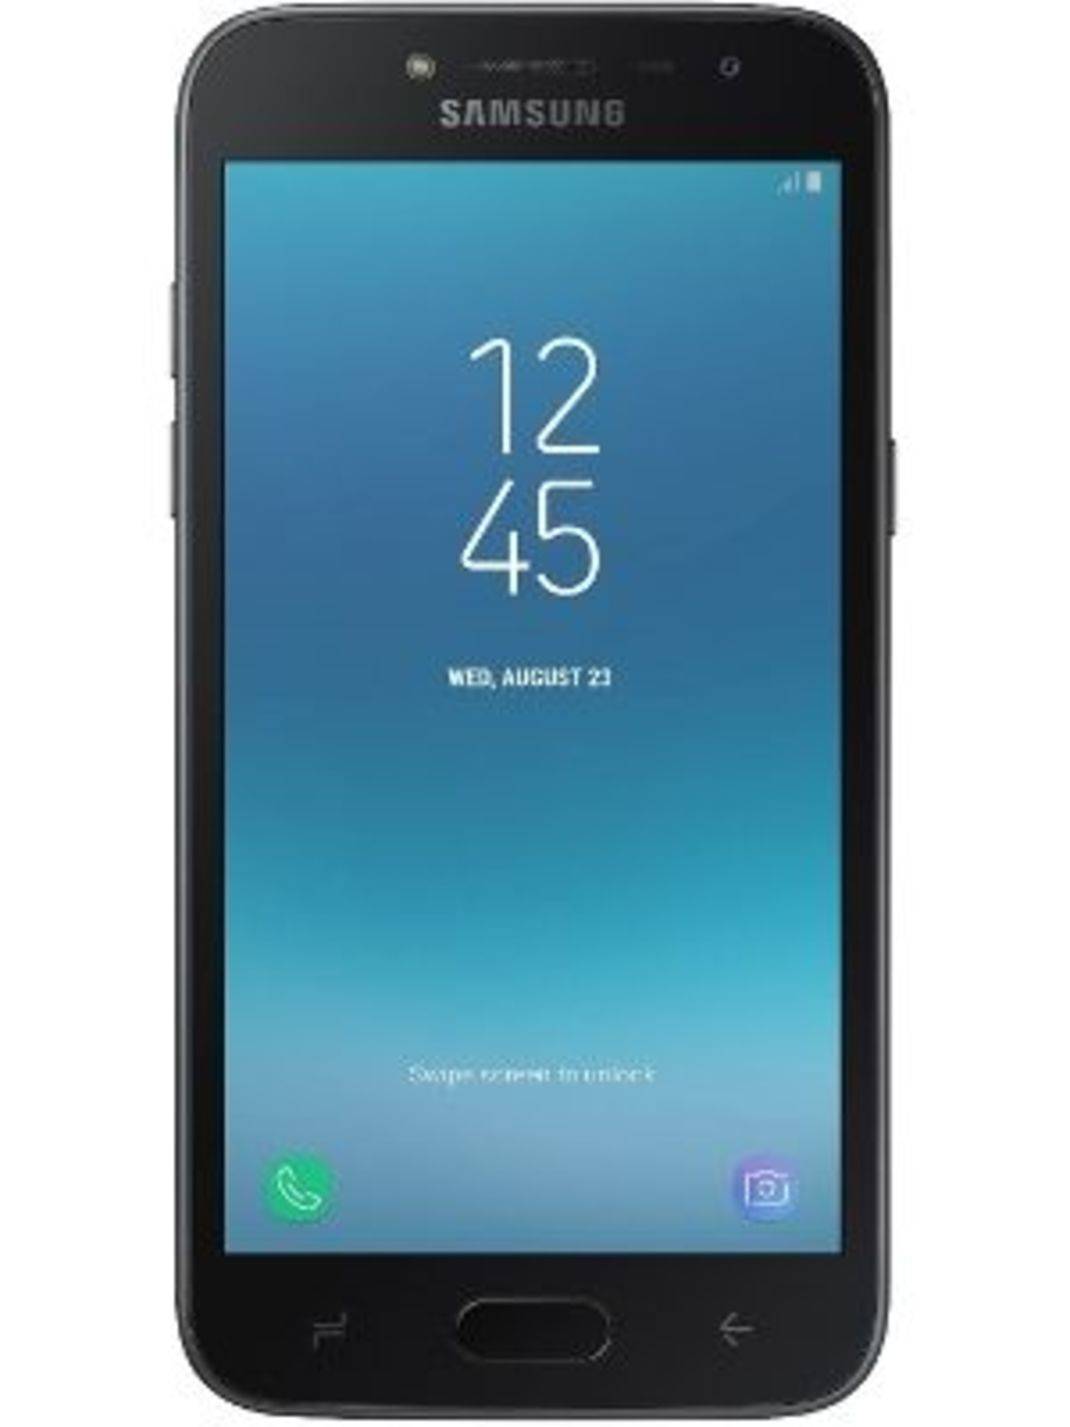 Samsung Galaxy J2 18 Vs Samsung Galaxy J2 Pro 18 Compare Specifications Price Gadgets Now